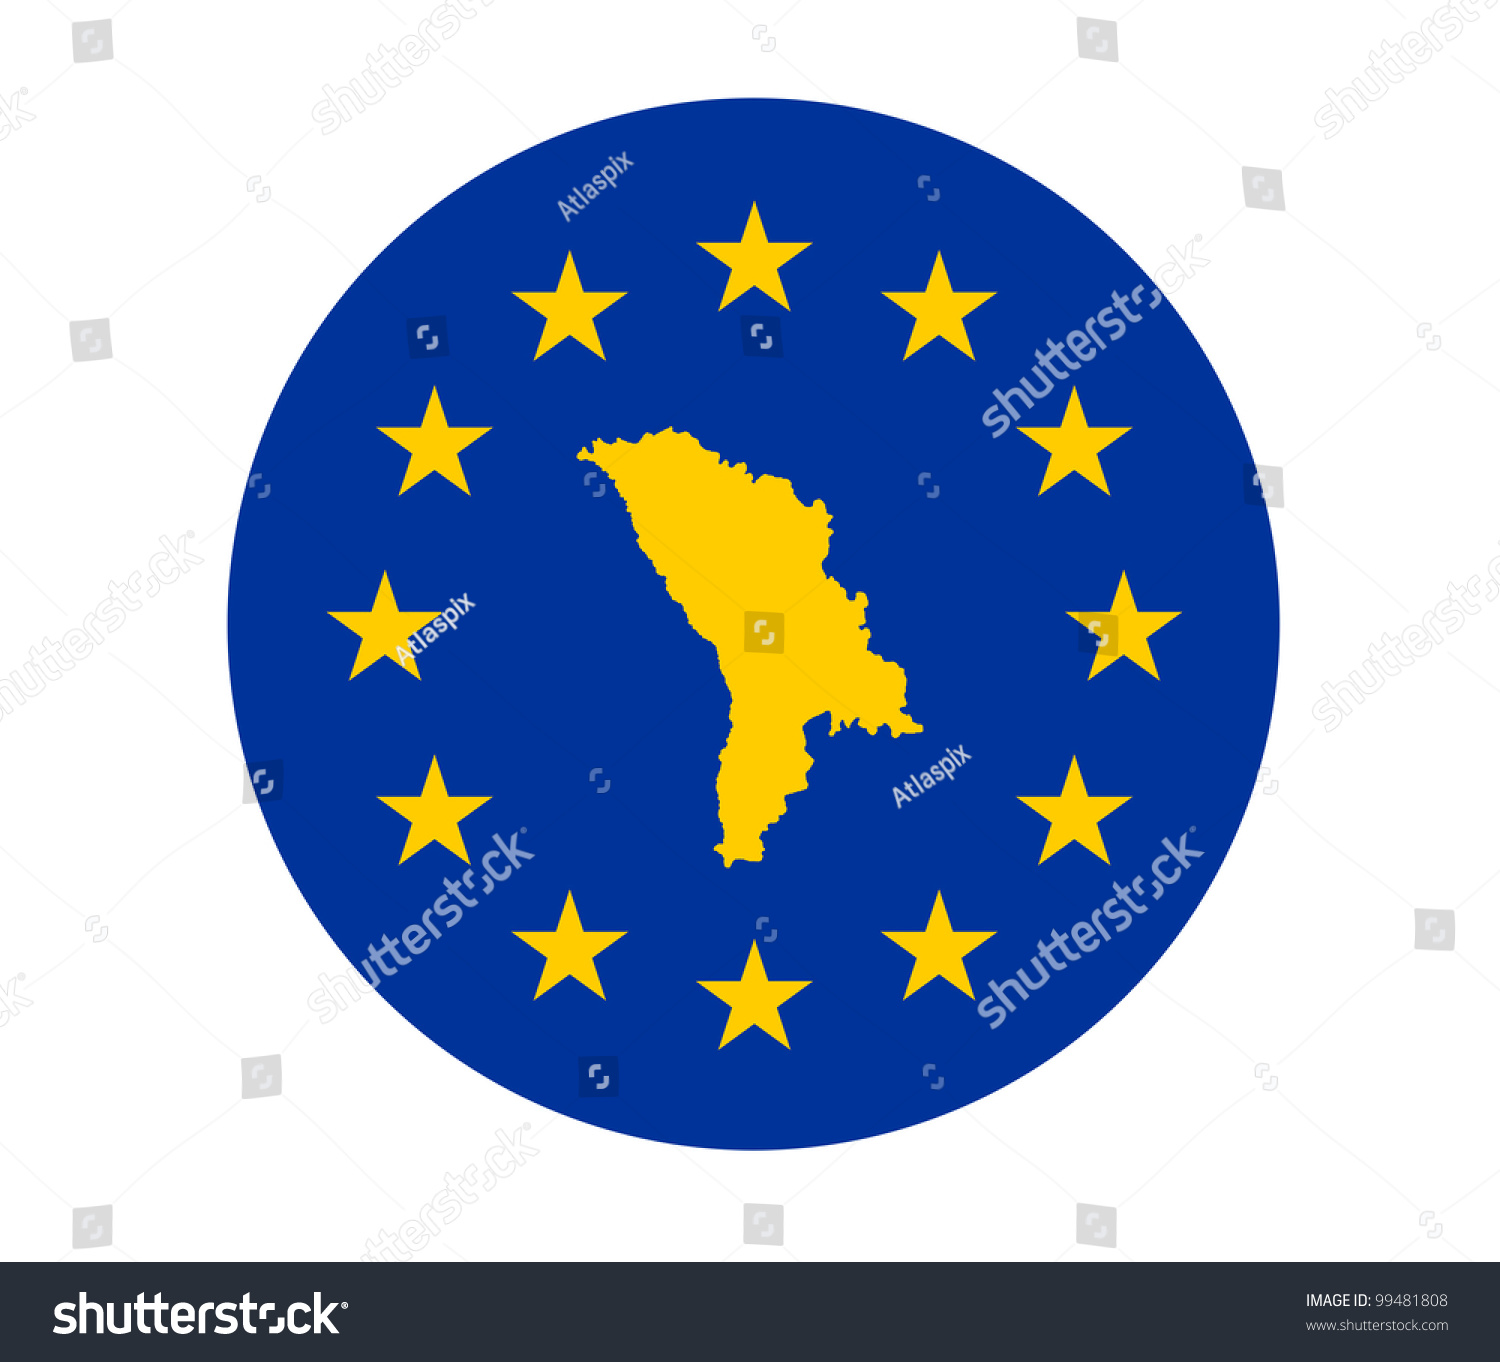 Moldova's Relations with European Union